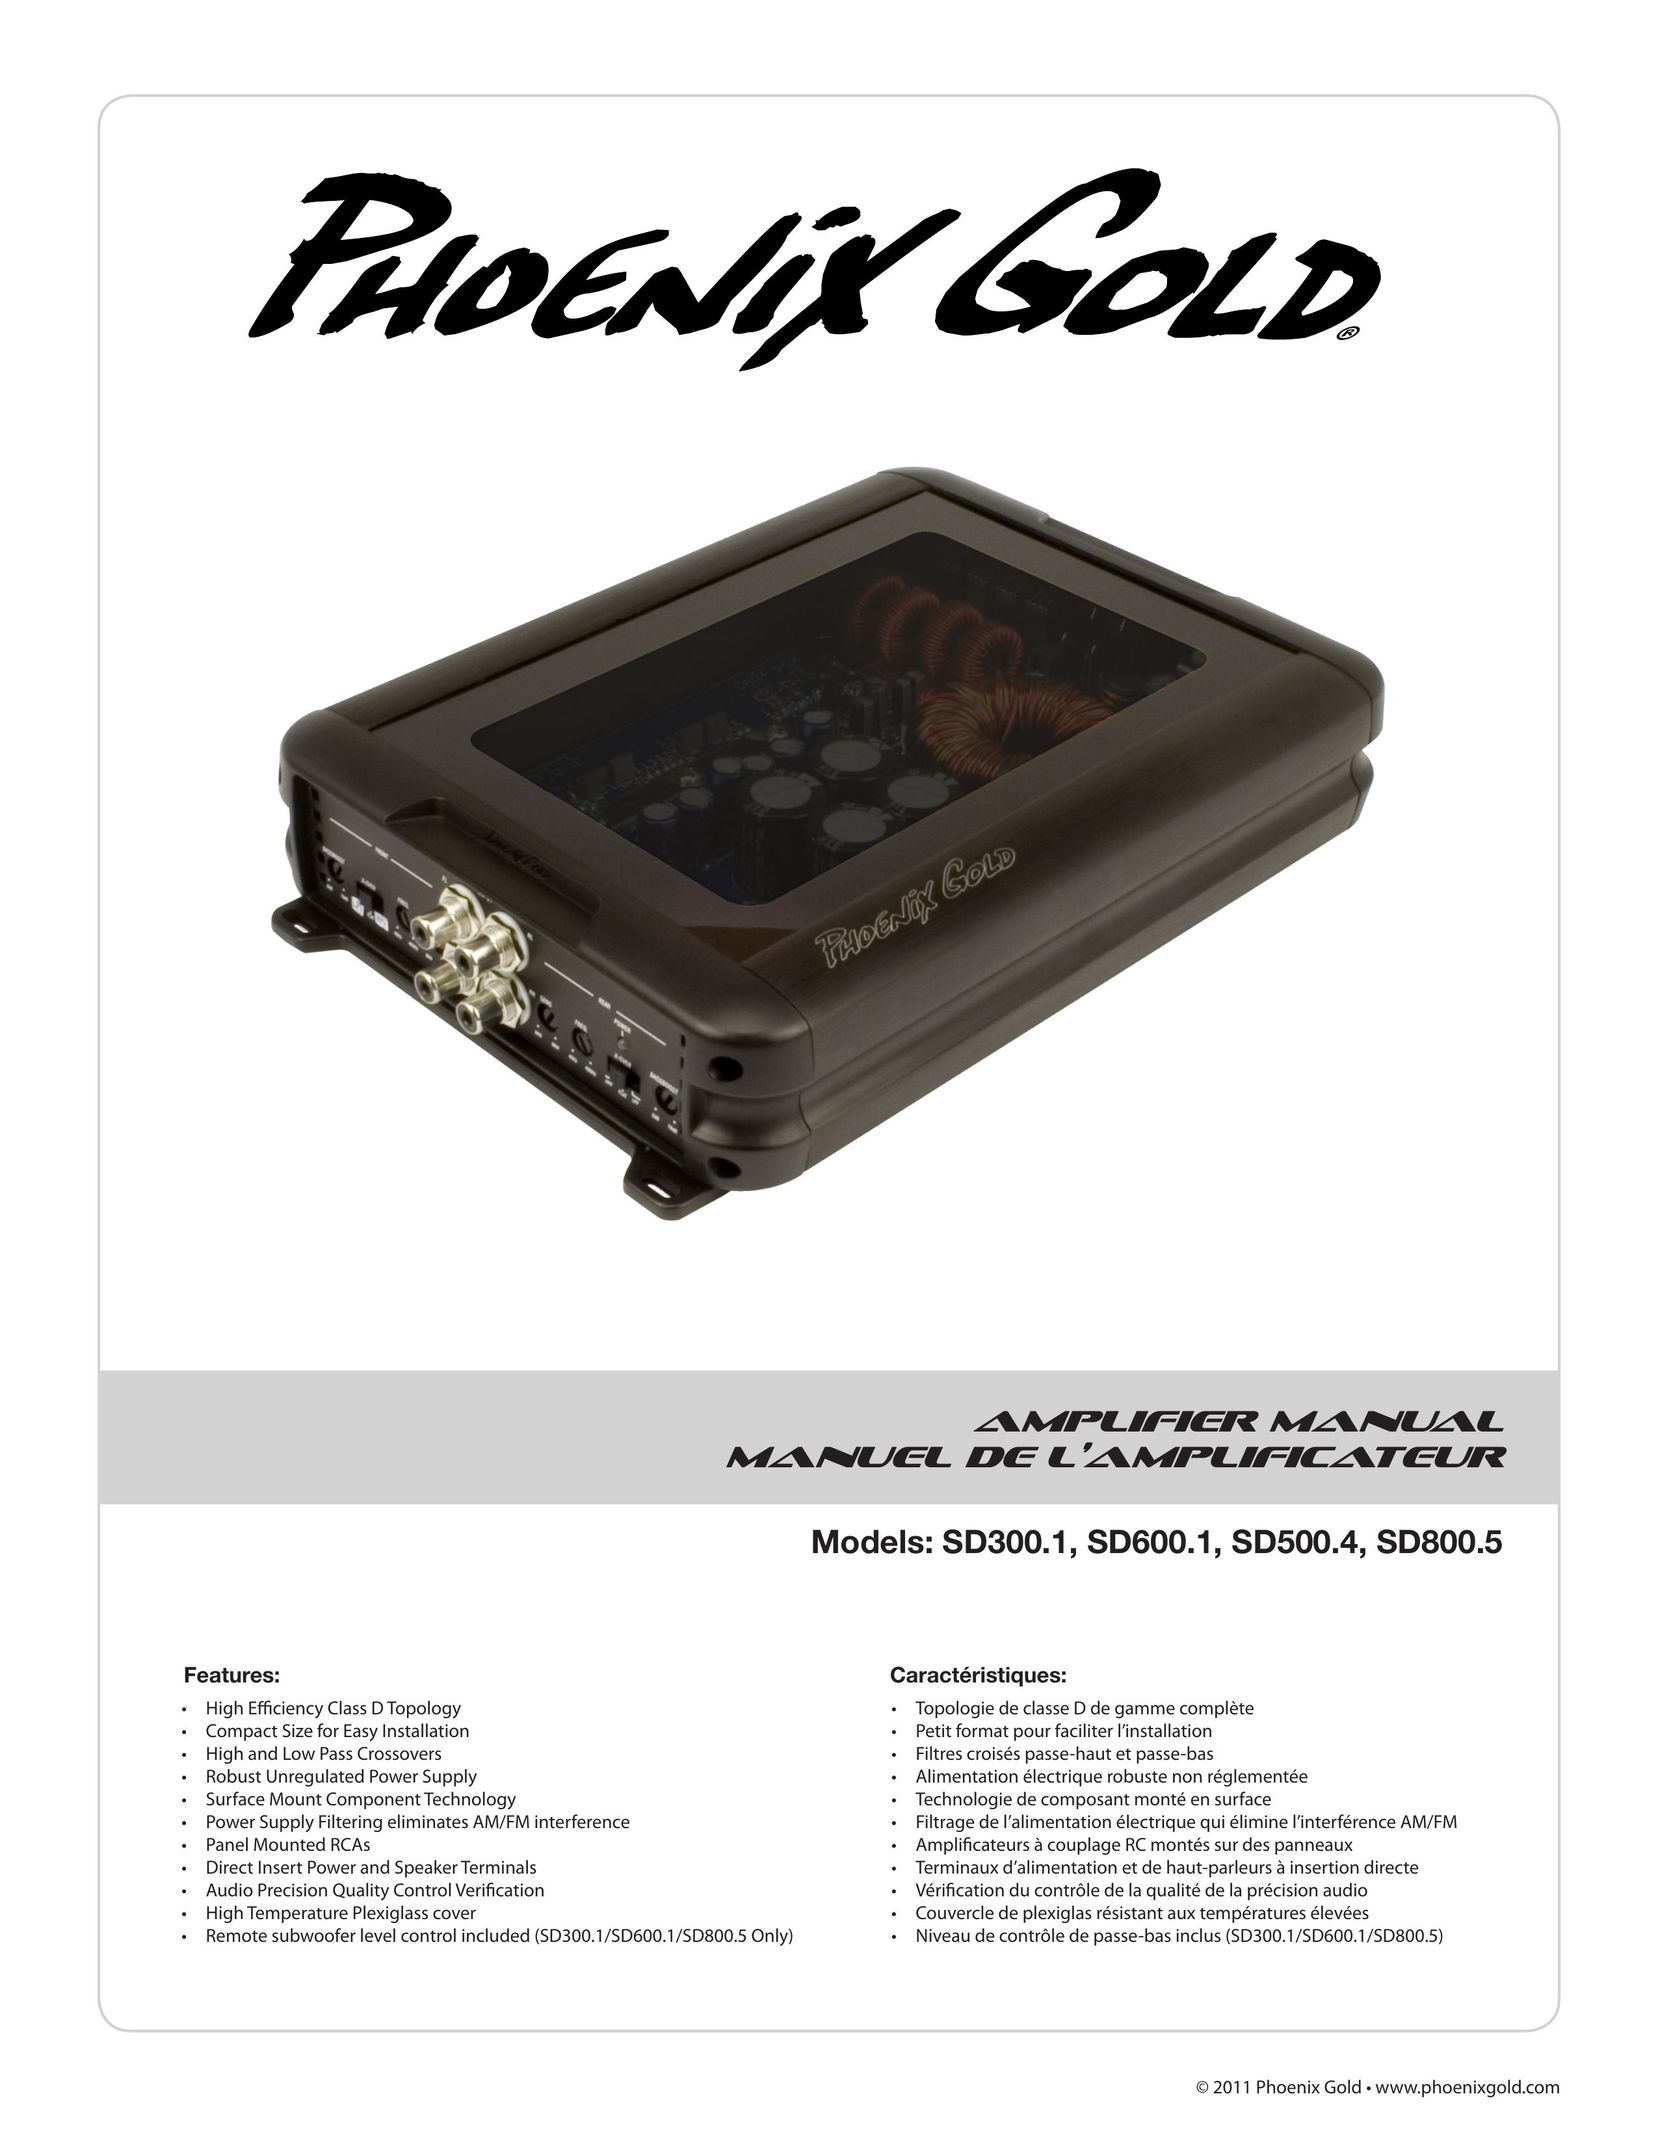 Phoenix Gold SD600.1 Car Amplifier User Manual